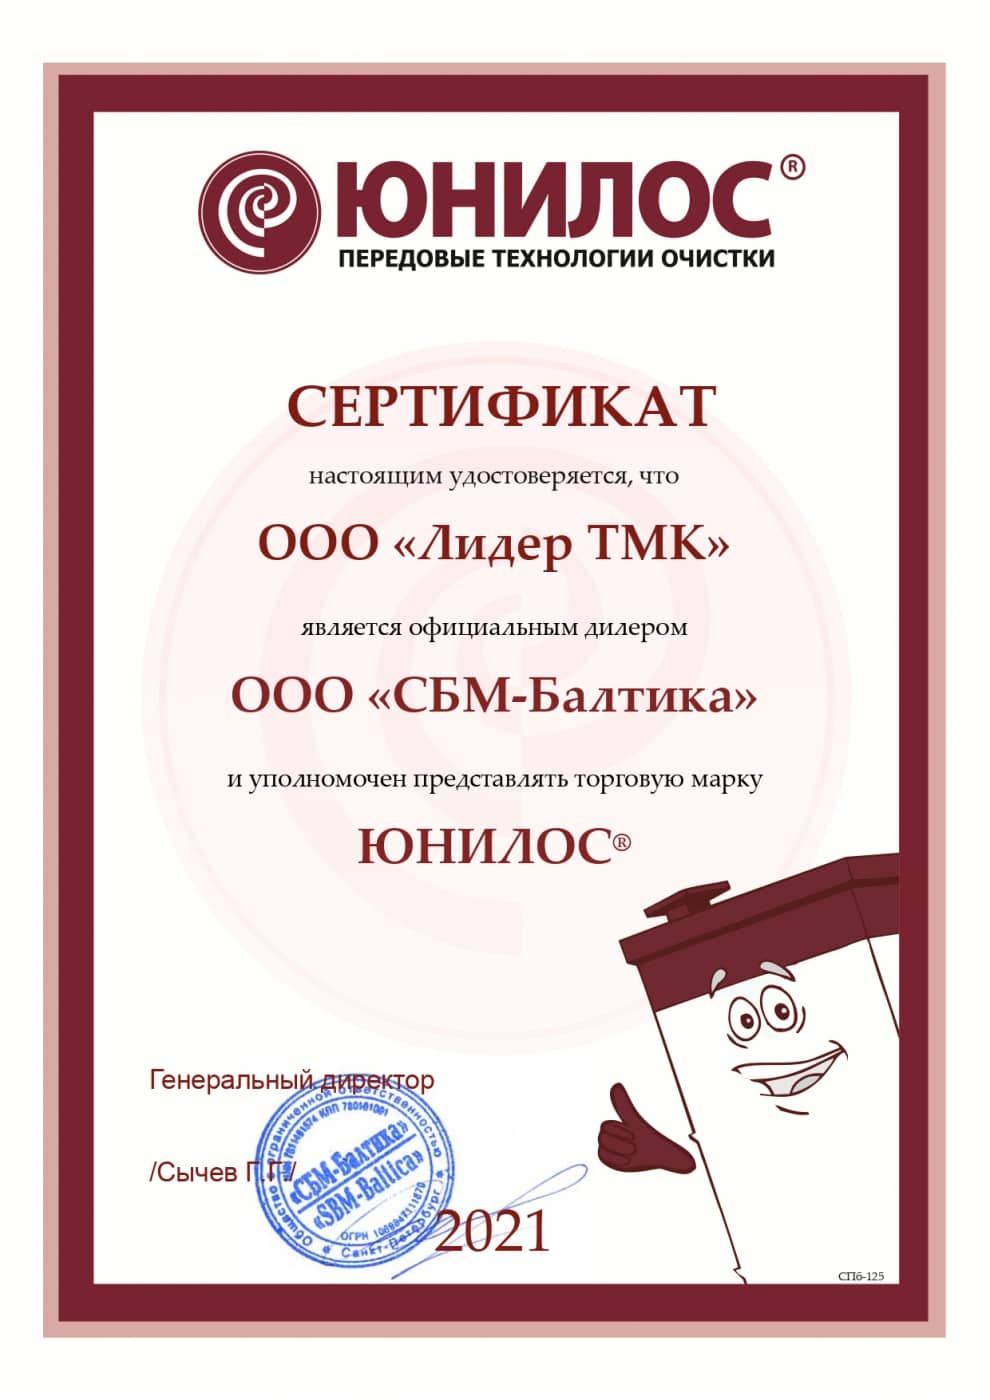 Септик Астра ДАБЛ 5 прин. сертификат